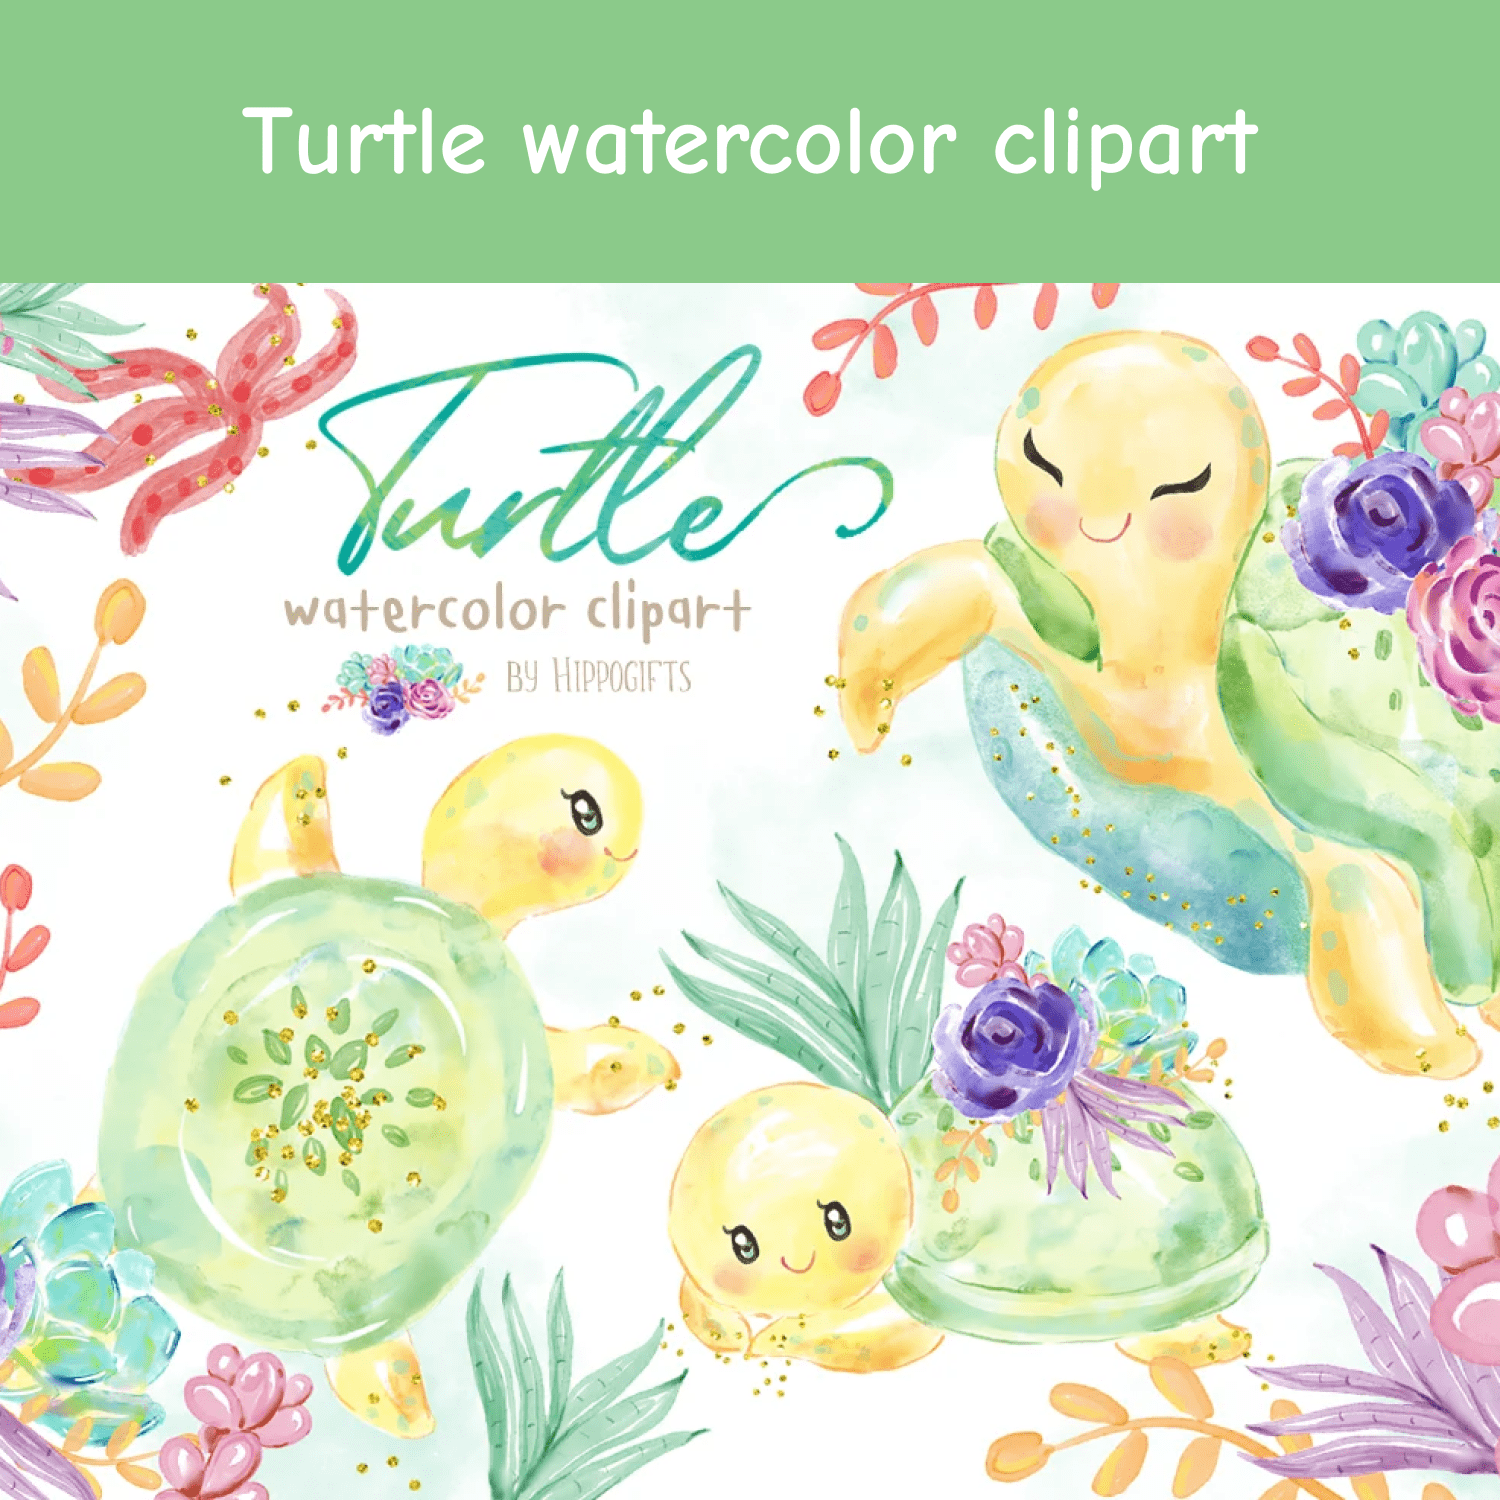 Turtle watercolor clipart.